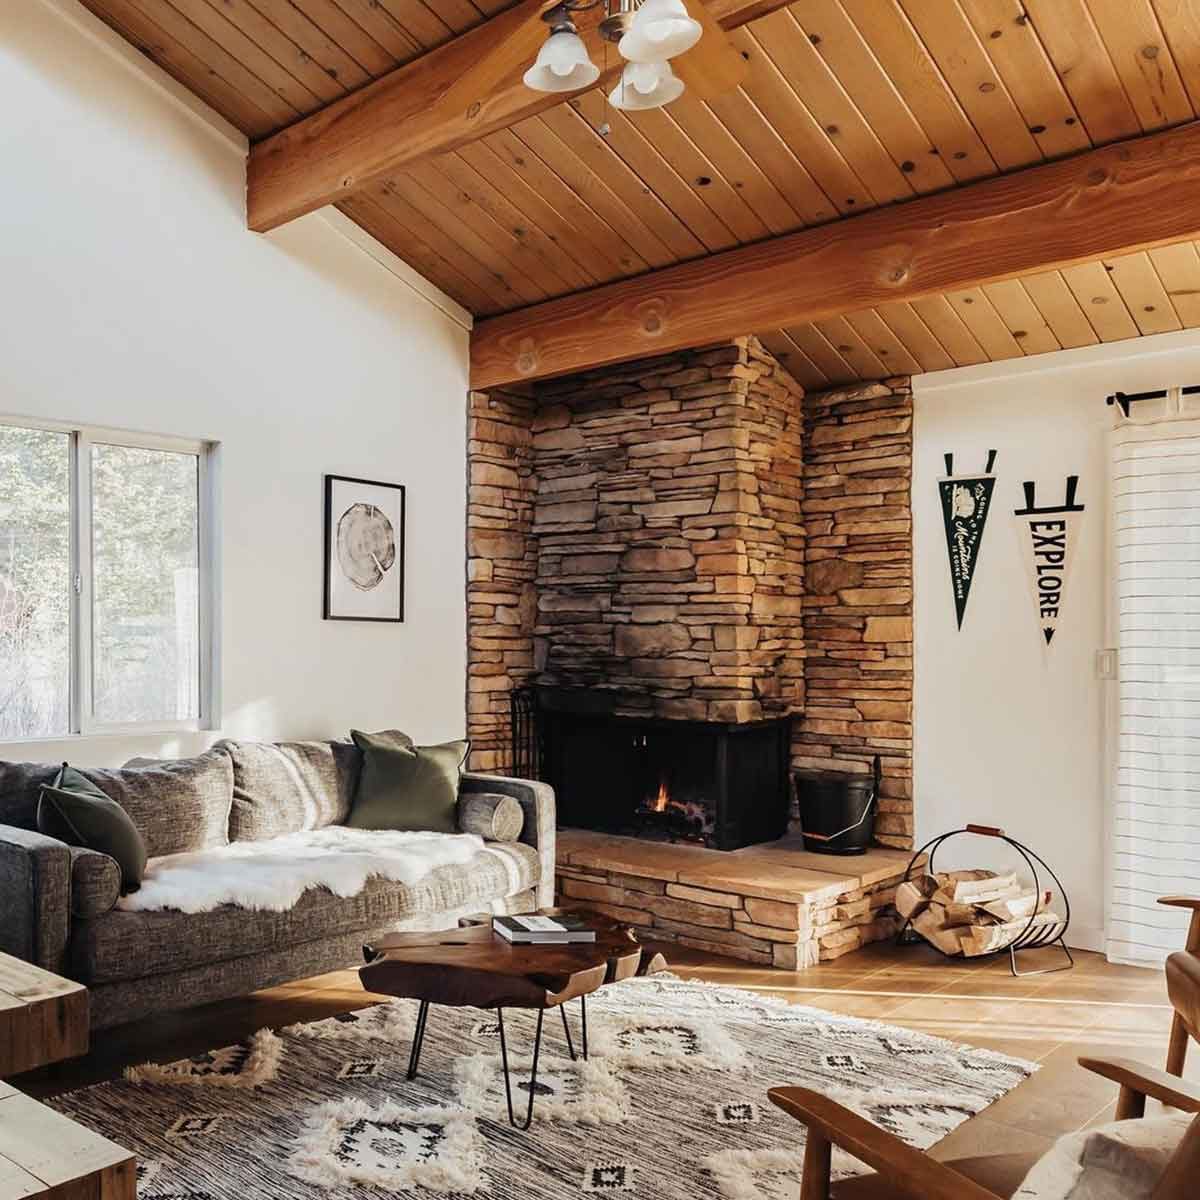 Cabin Decor Ideas: 10 Best Interior Designs | The Family Handyman